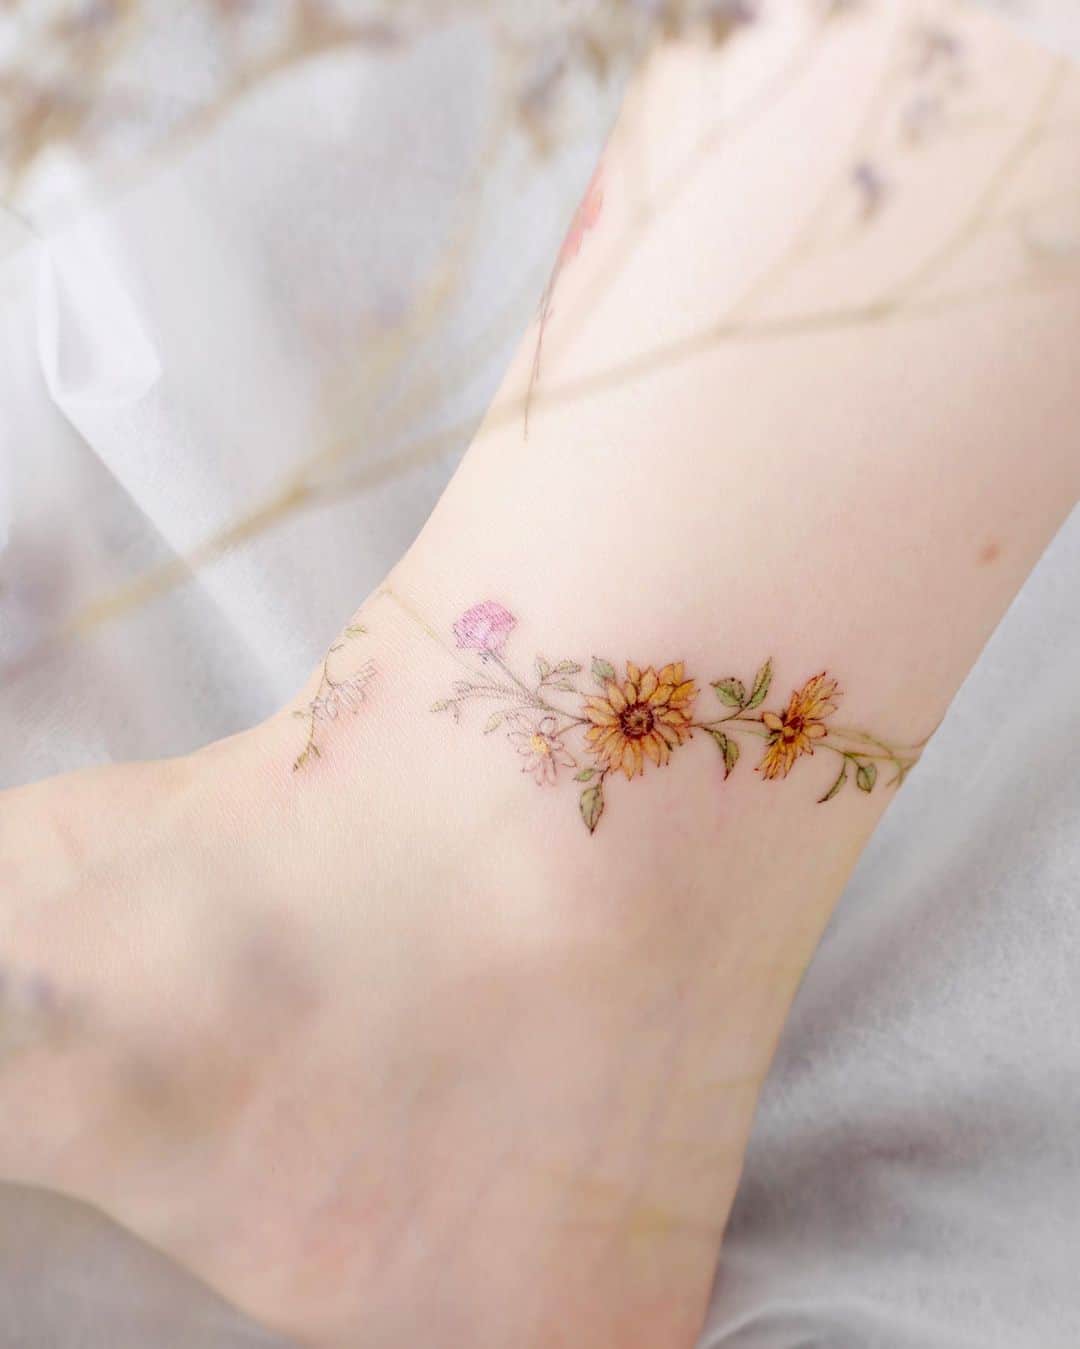 Sunflower Ankle Tattoo